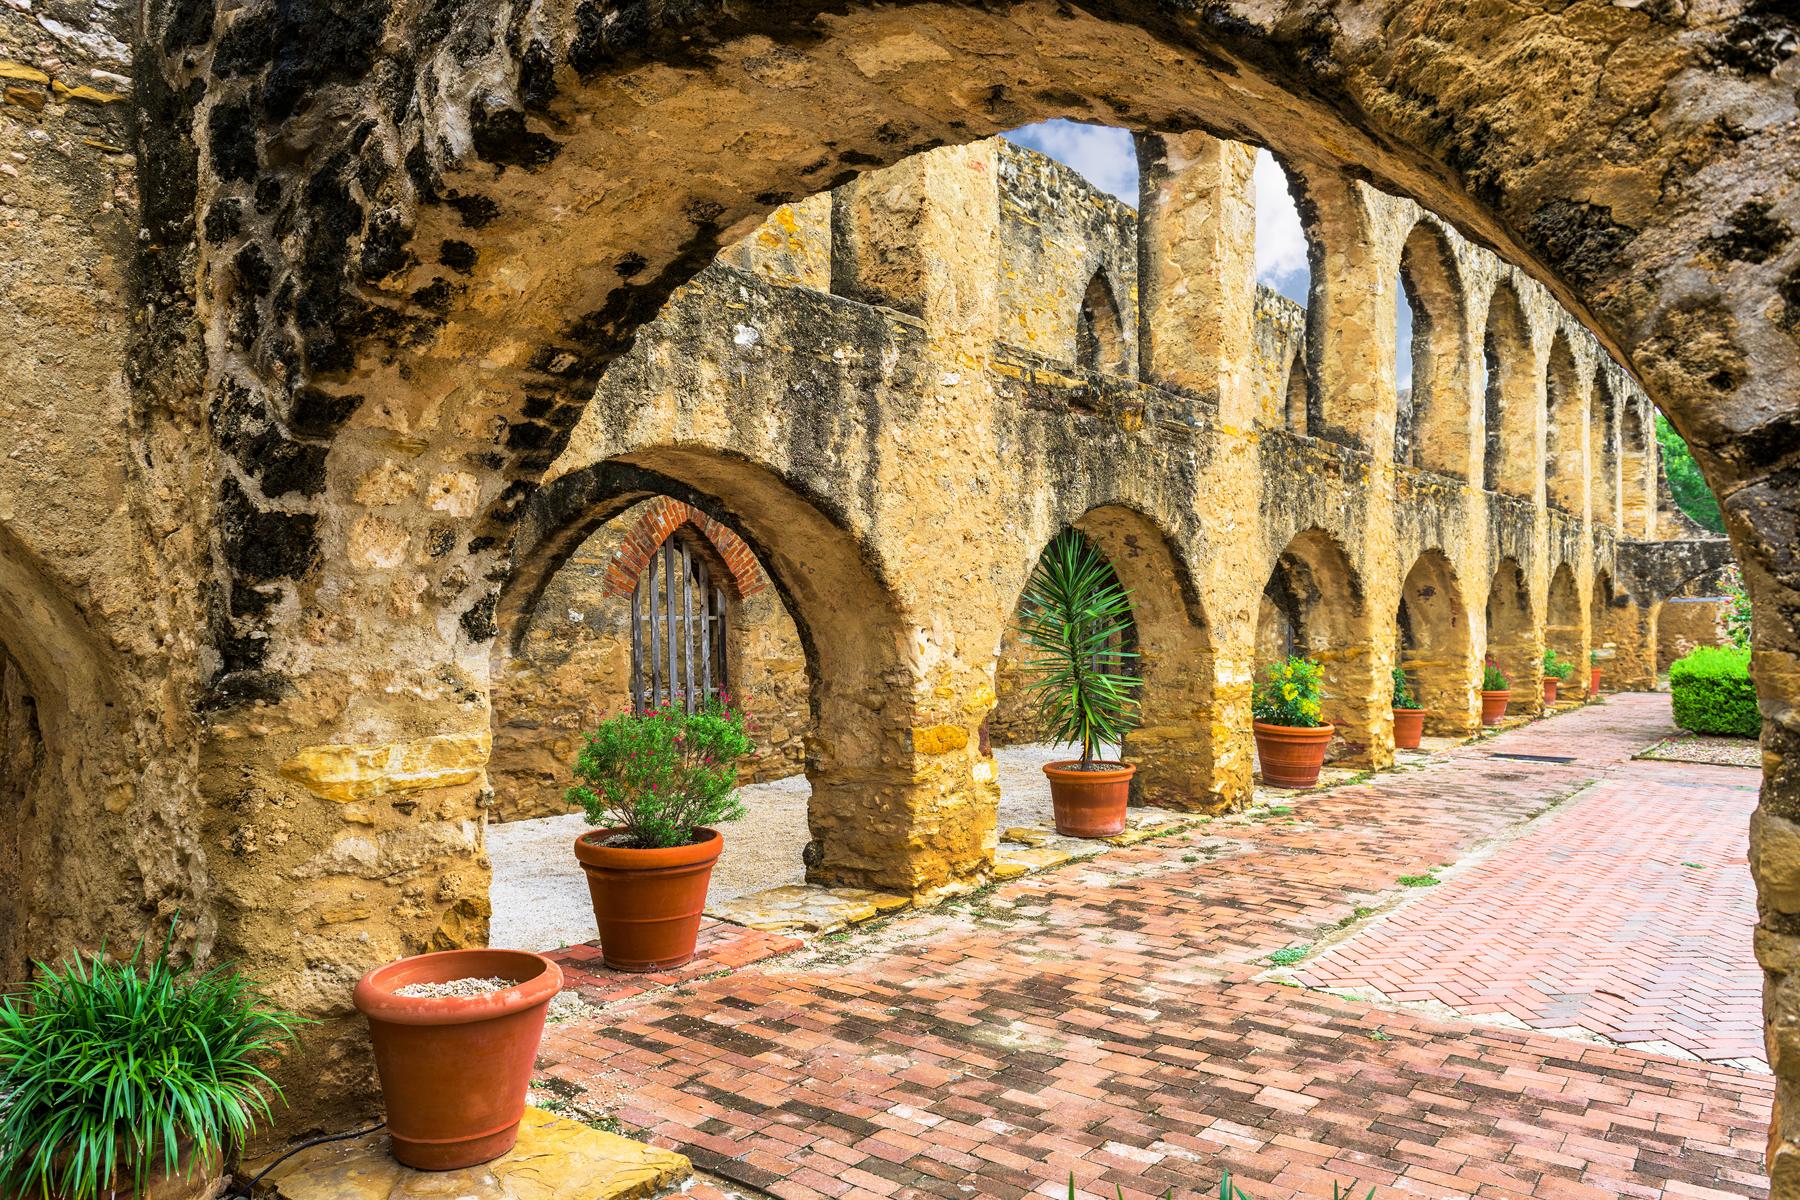 Places to Visit: 10+ San Antonio Texas Tourist Attractions